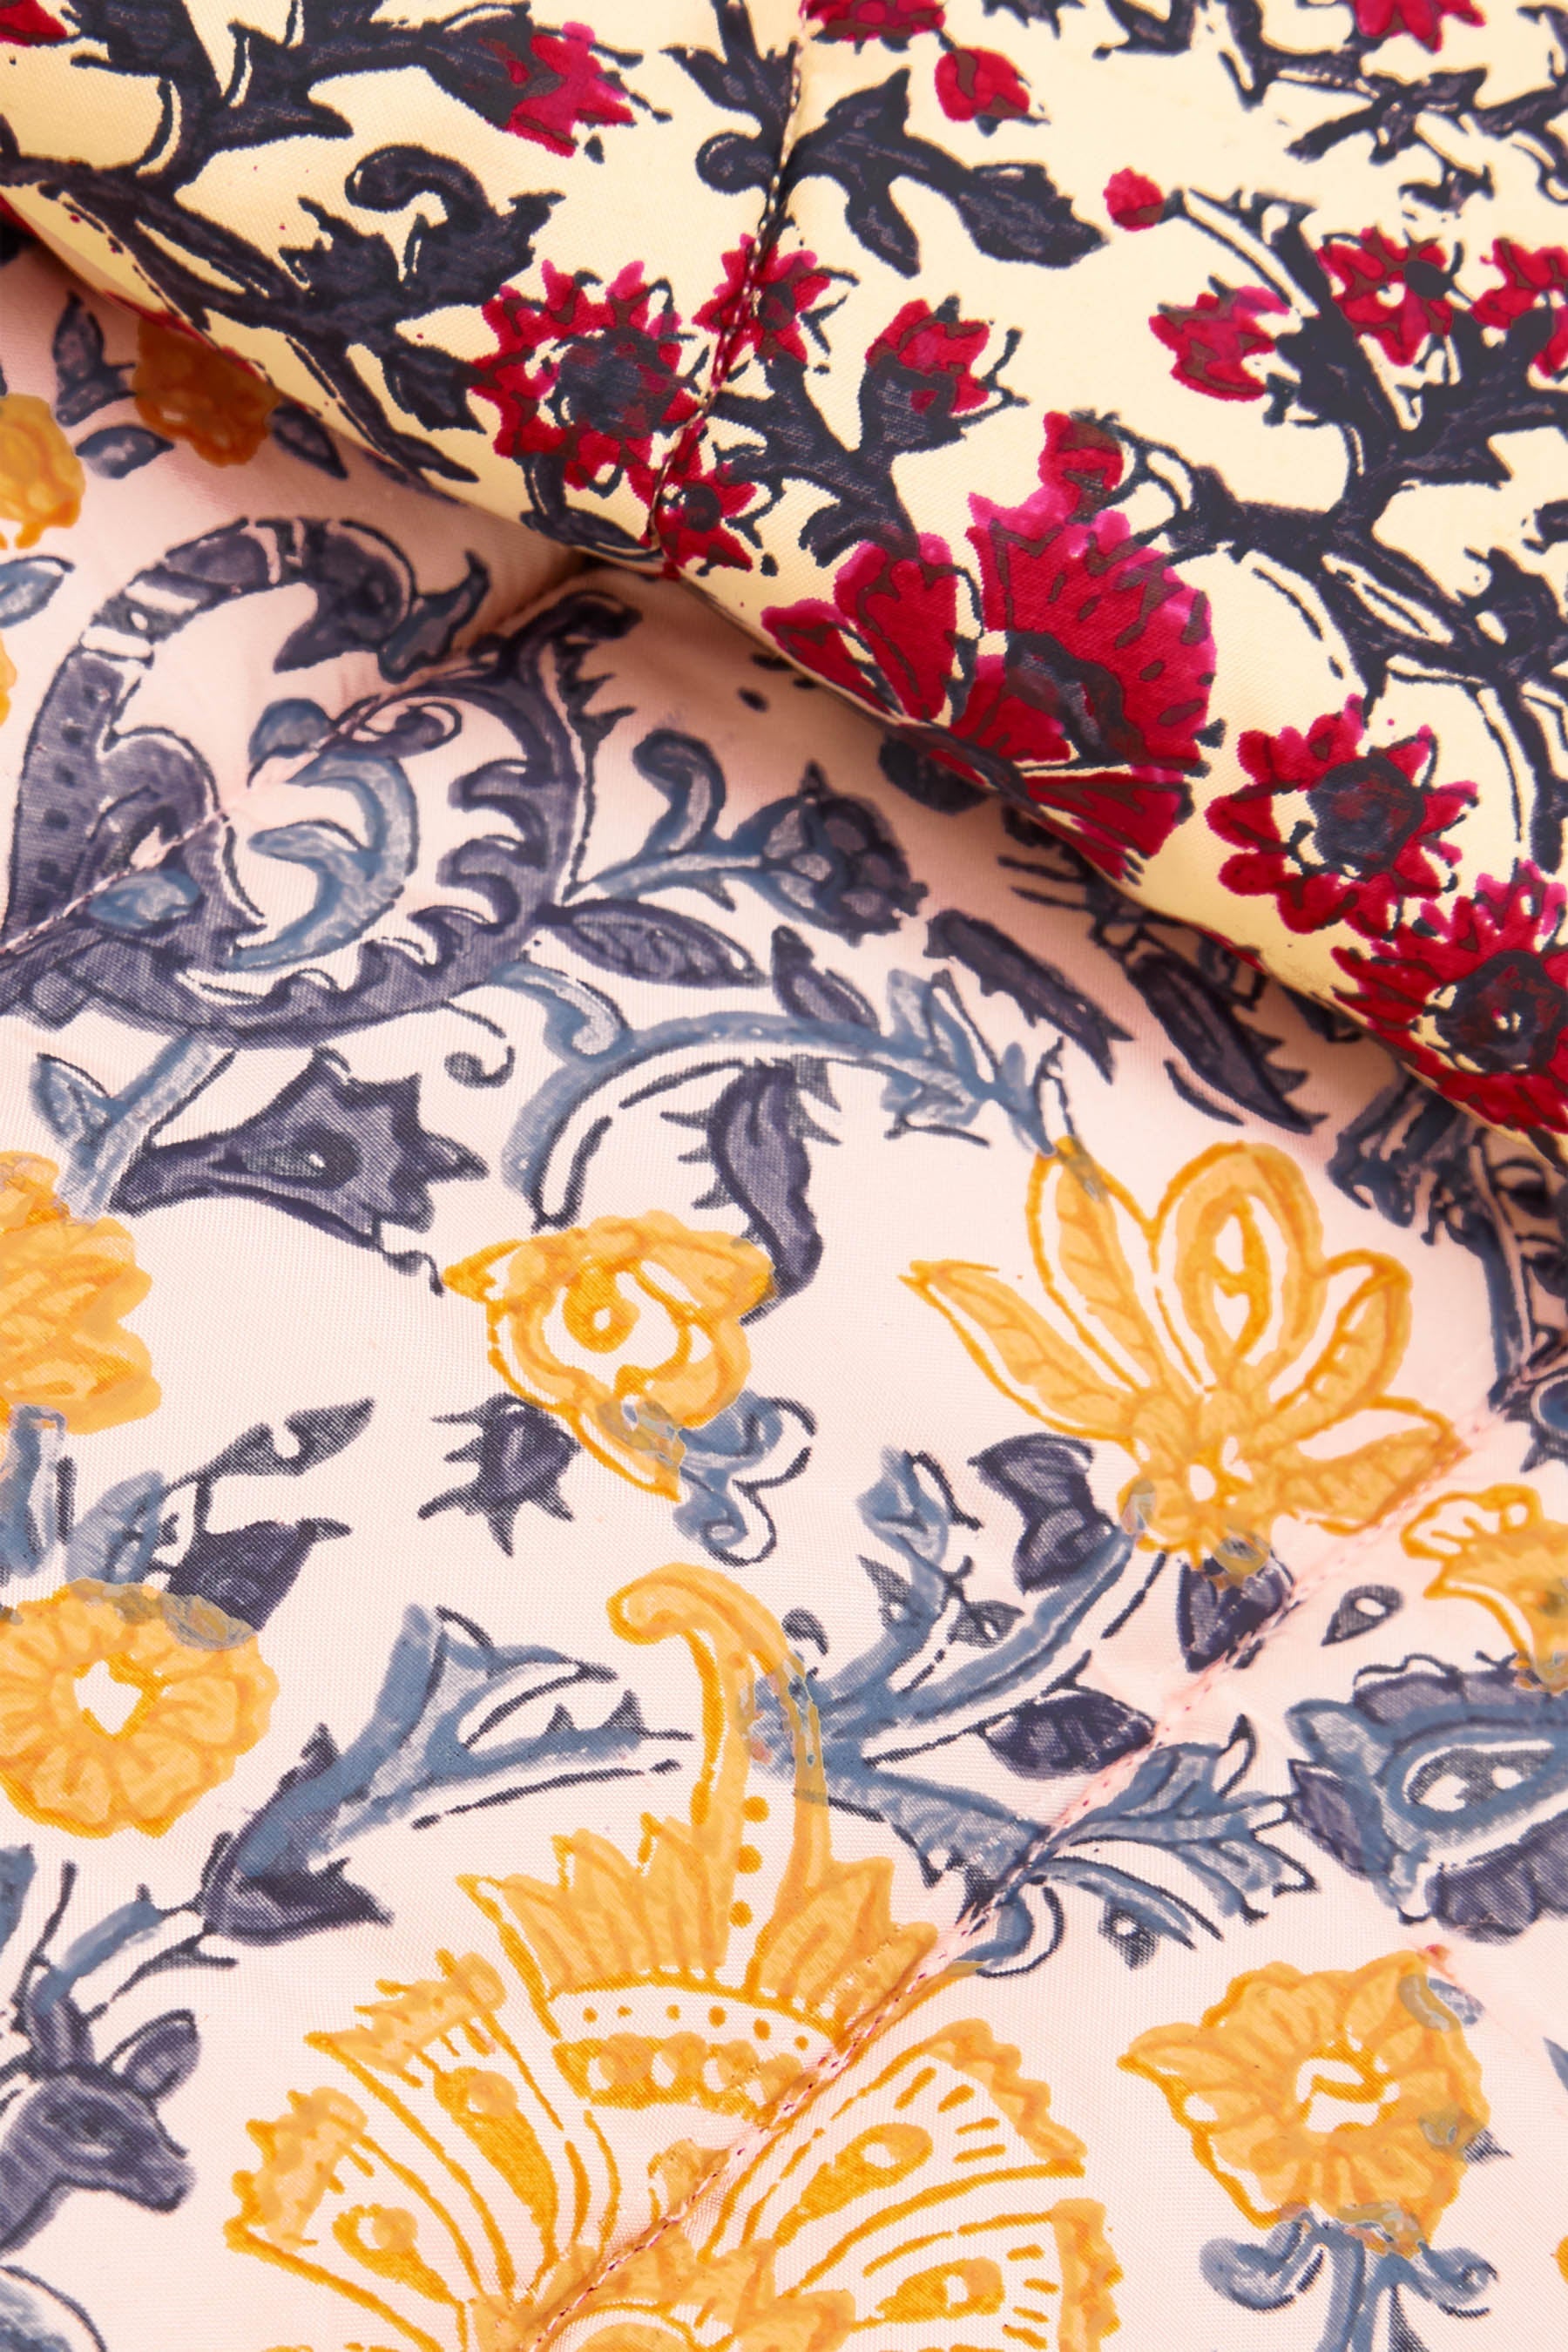 Shanaya Silk Reversible Quilt